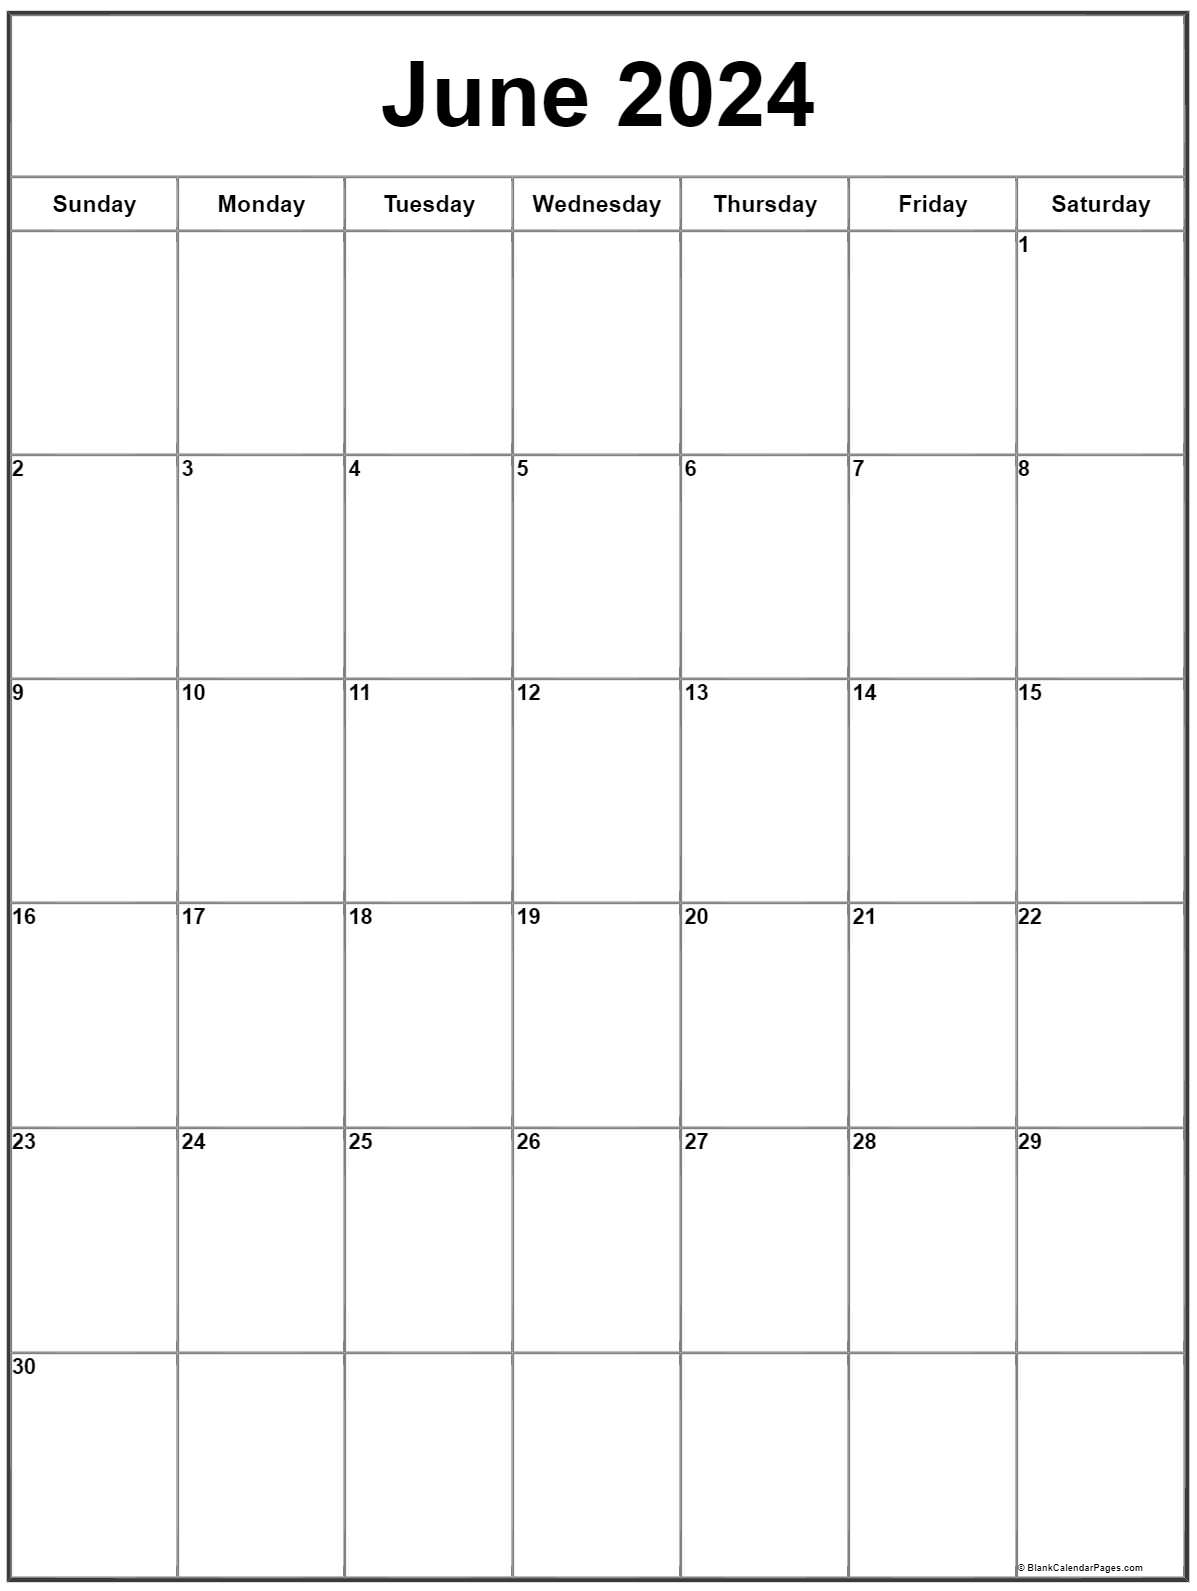 June 2023 Calendar Free Printable Calendar June 2023 Calendar 